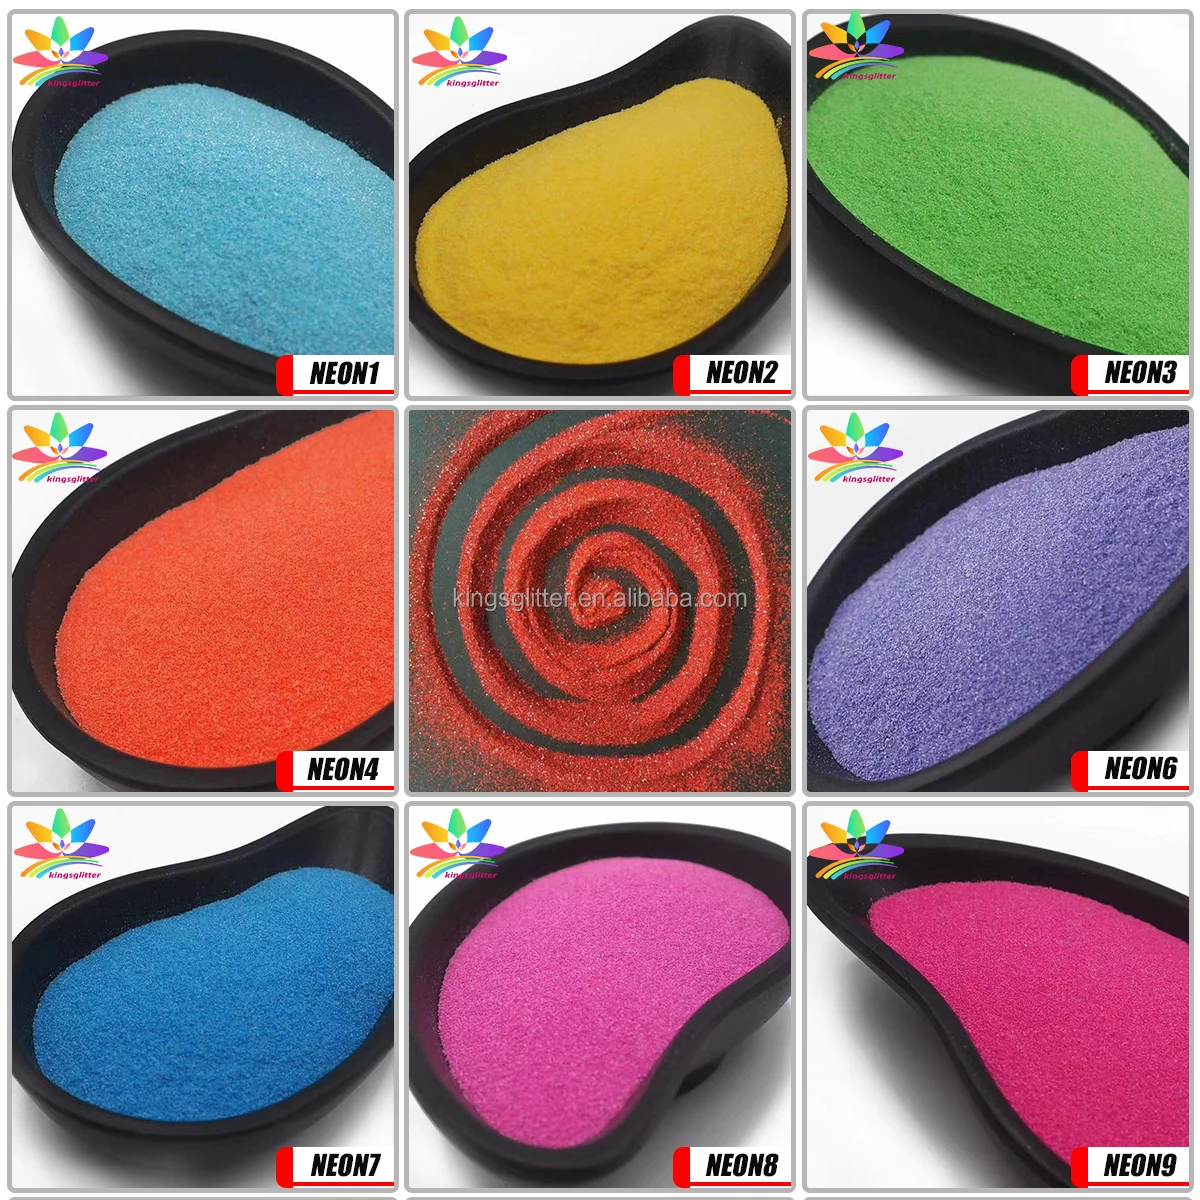 wholesale high quality cosmetic glitter bulk biodegradable glitter for body nail art makeup Hc87a72bfbca8495e81c79bfe1ff82071S